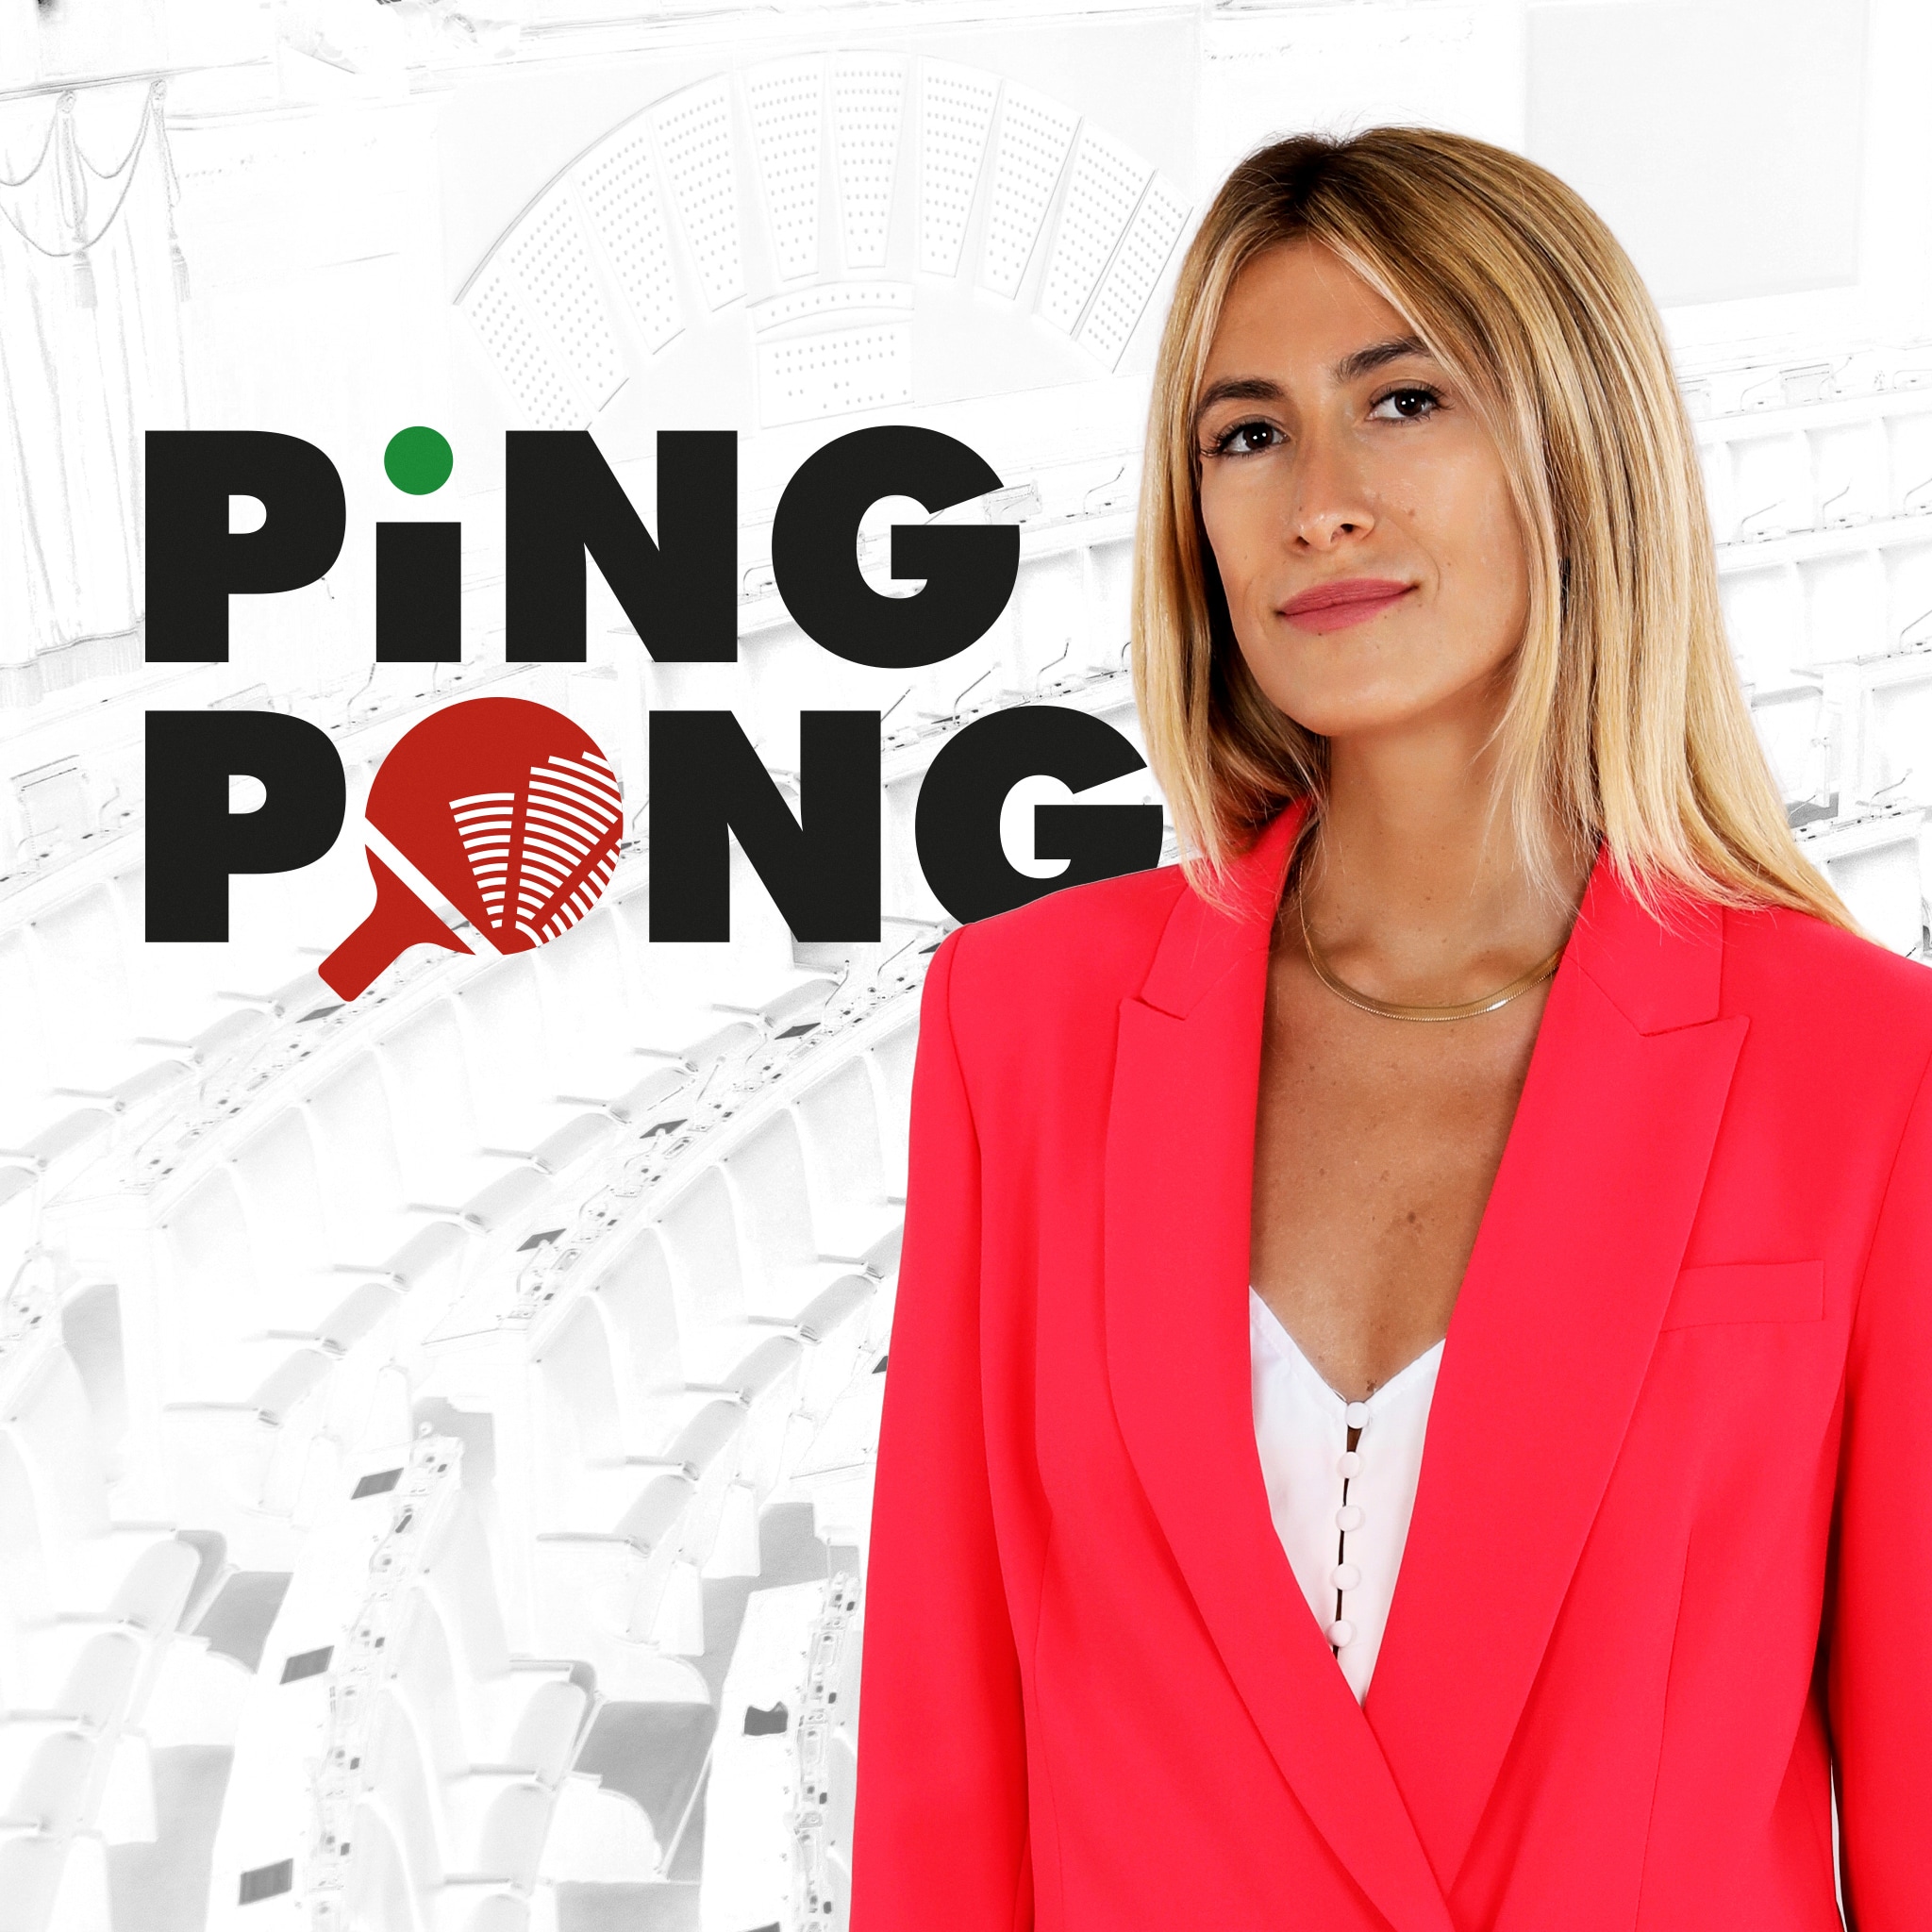 Rai Radio 1 Ping Pong